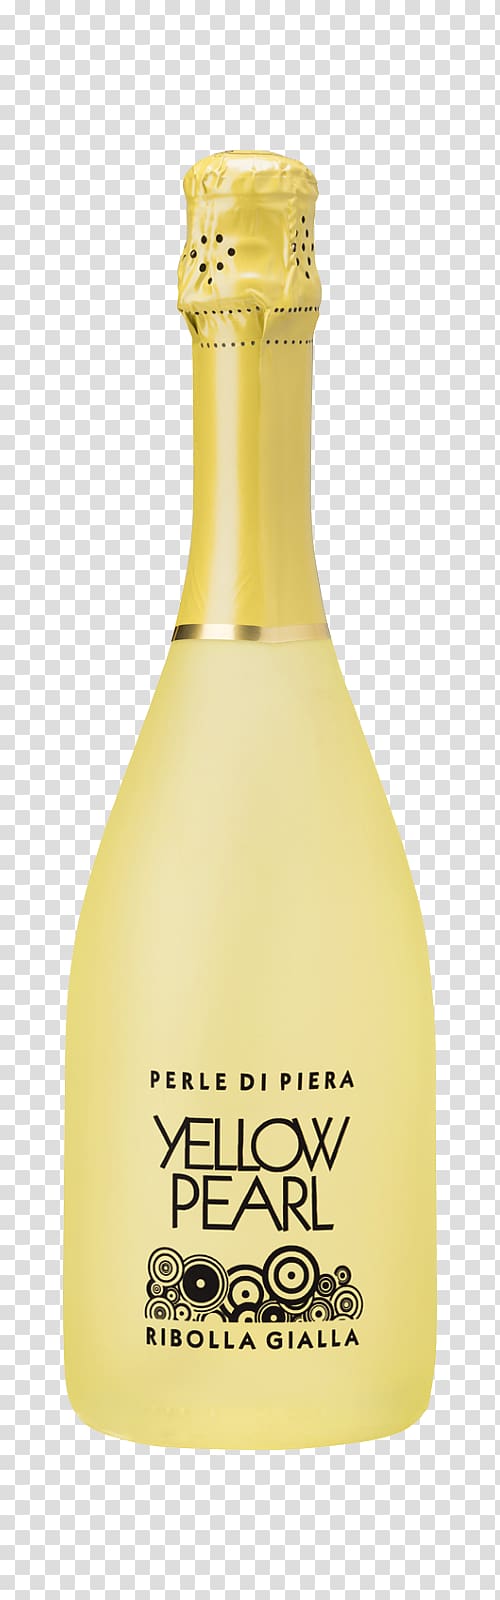 Liqueur Glass bottle Ribolla Gialla Piera Martellozzo S.P.A. Pinot noir, Martell transparent background PNG clipart